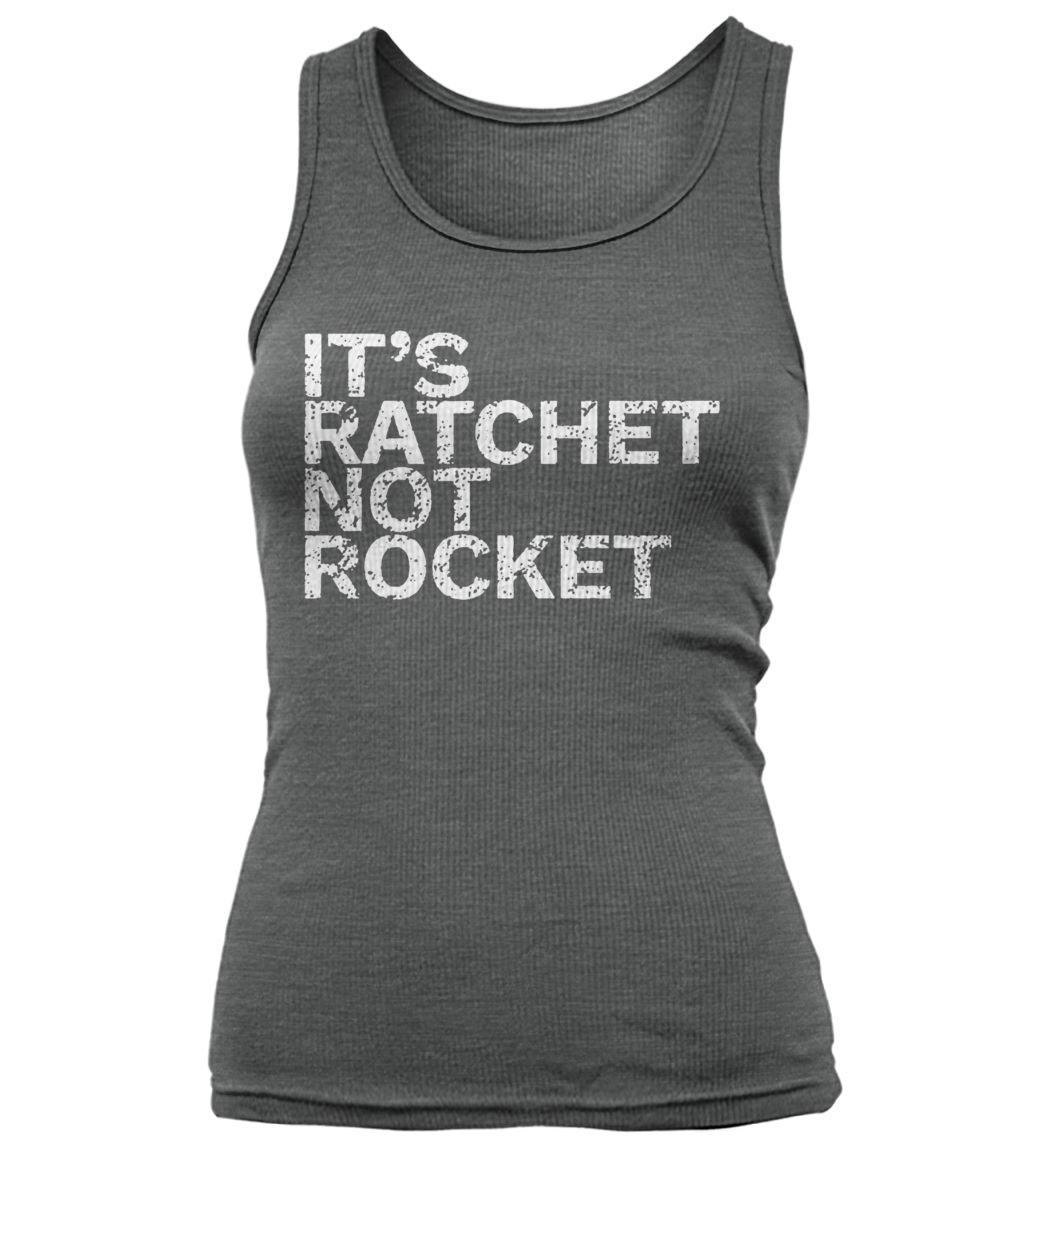 It's ratchet not rocket women's tank top